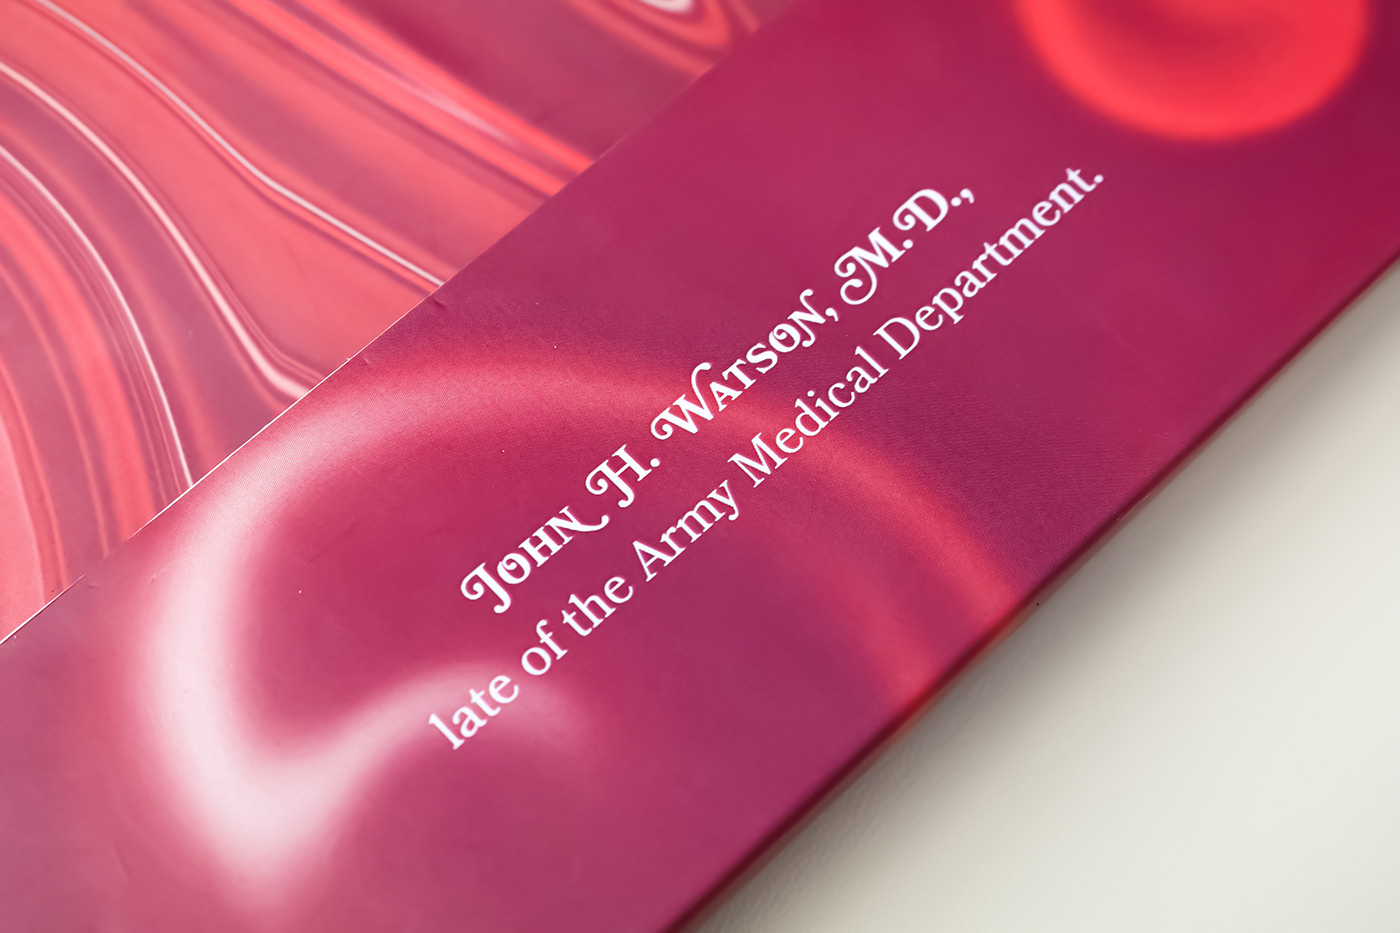 Classic concept design graphic design  ILLUSTRATION  Packaging Production publication scarlet Sherlock Holmes